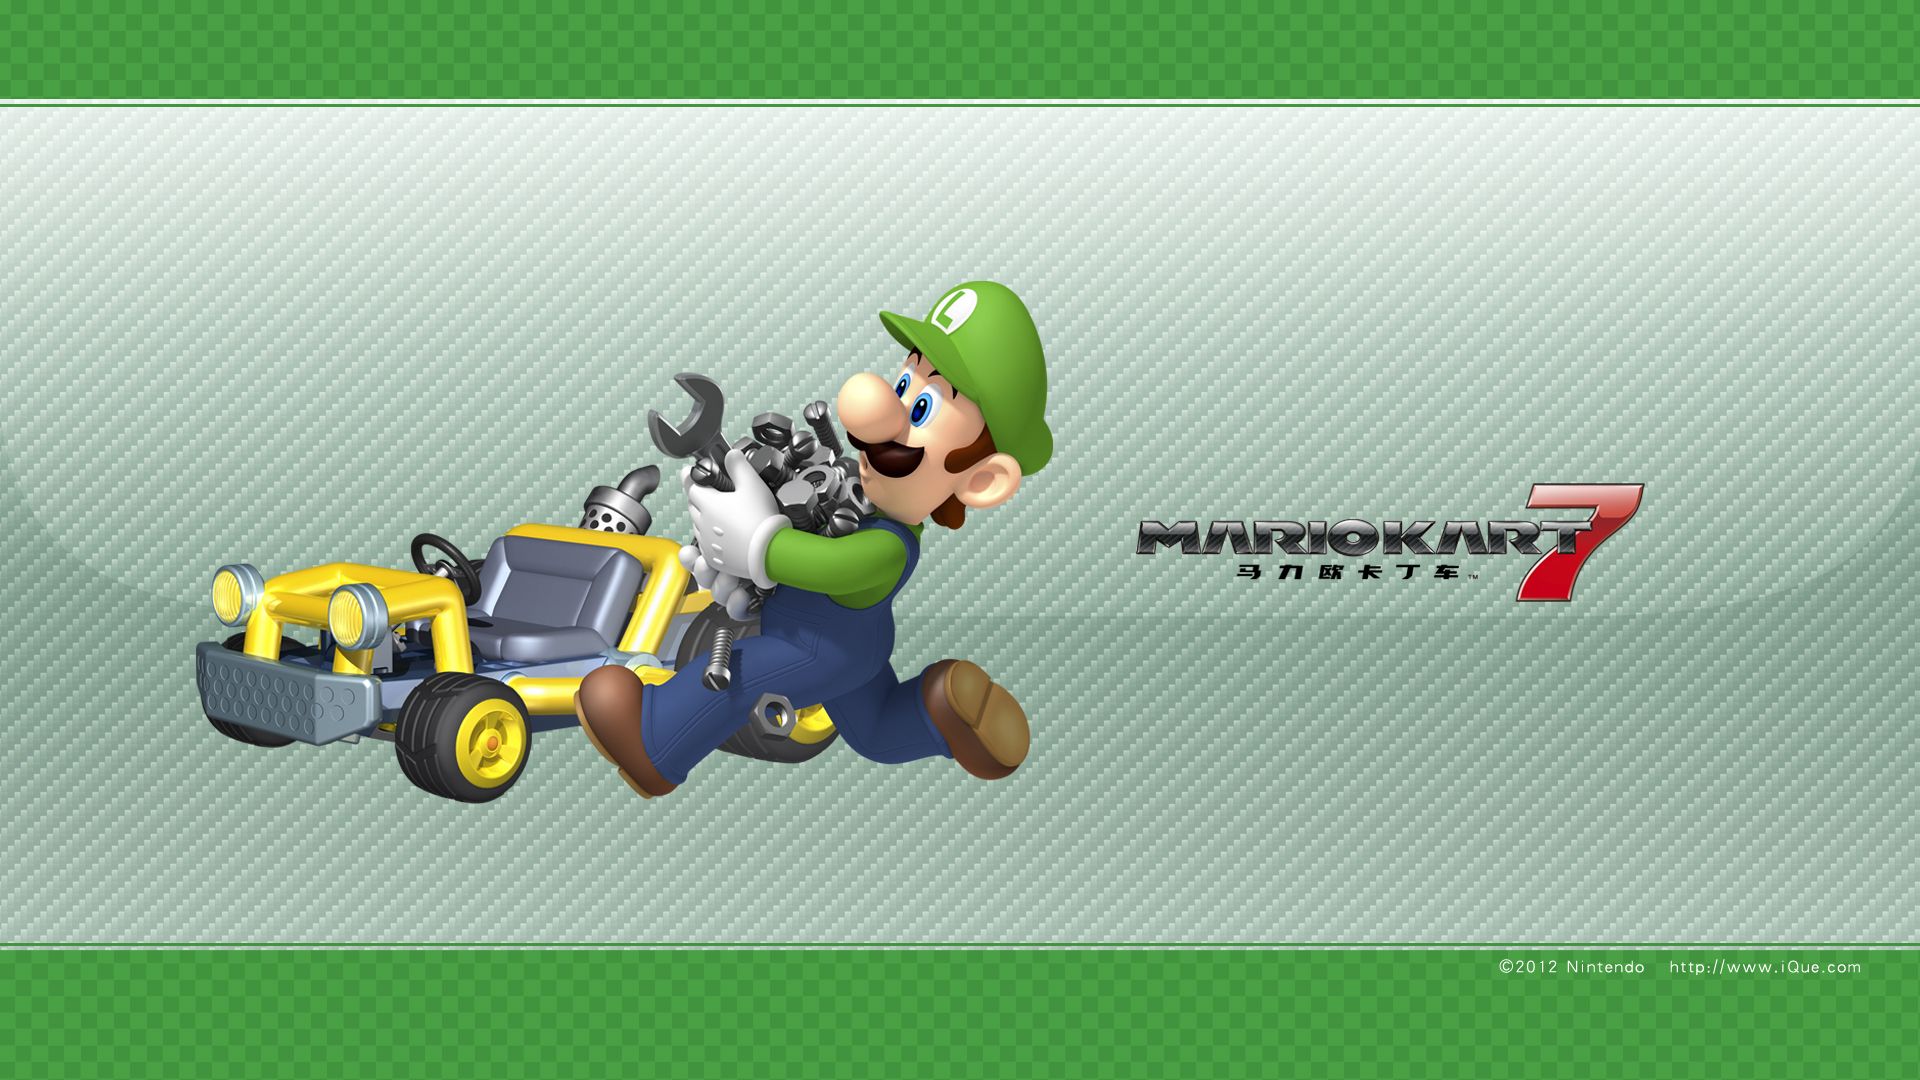 Mario Kart 7 (2011) promotional art